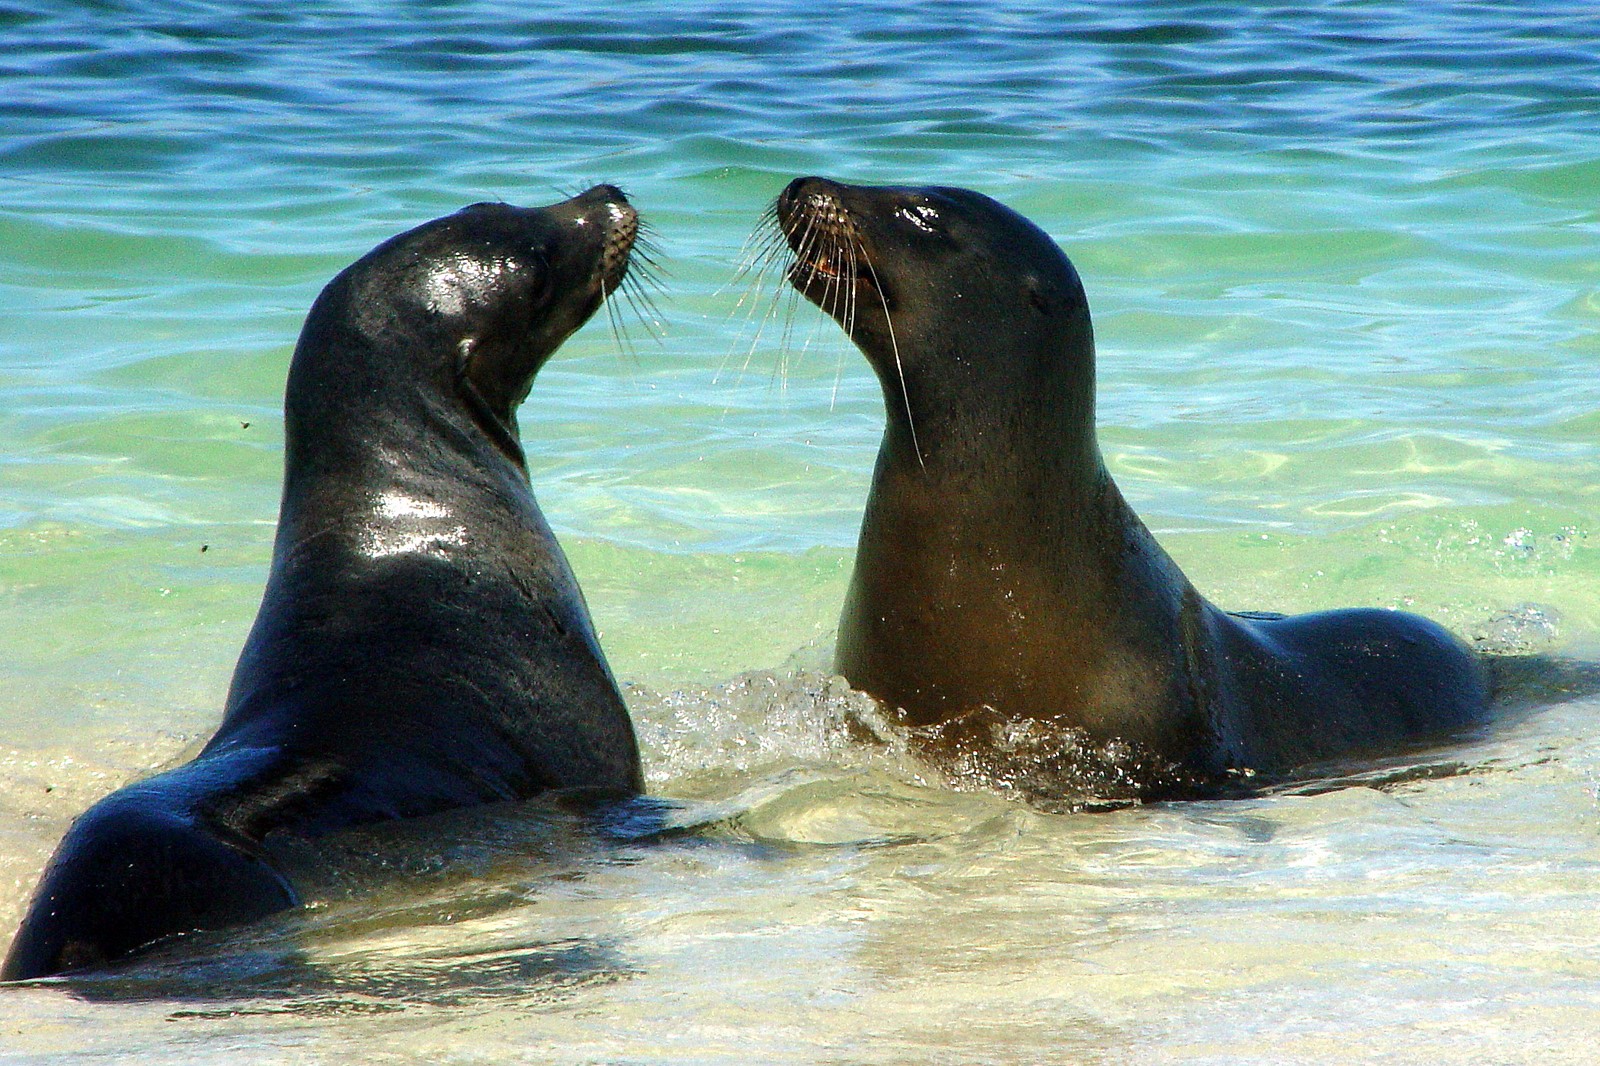 Two sea lions enjoying the beach